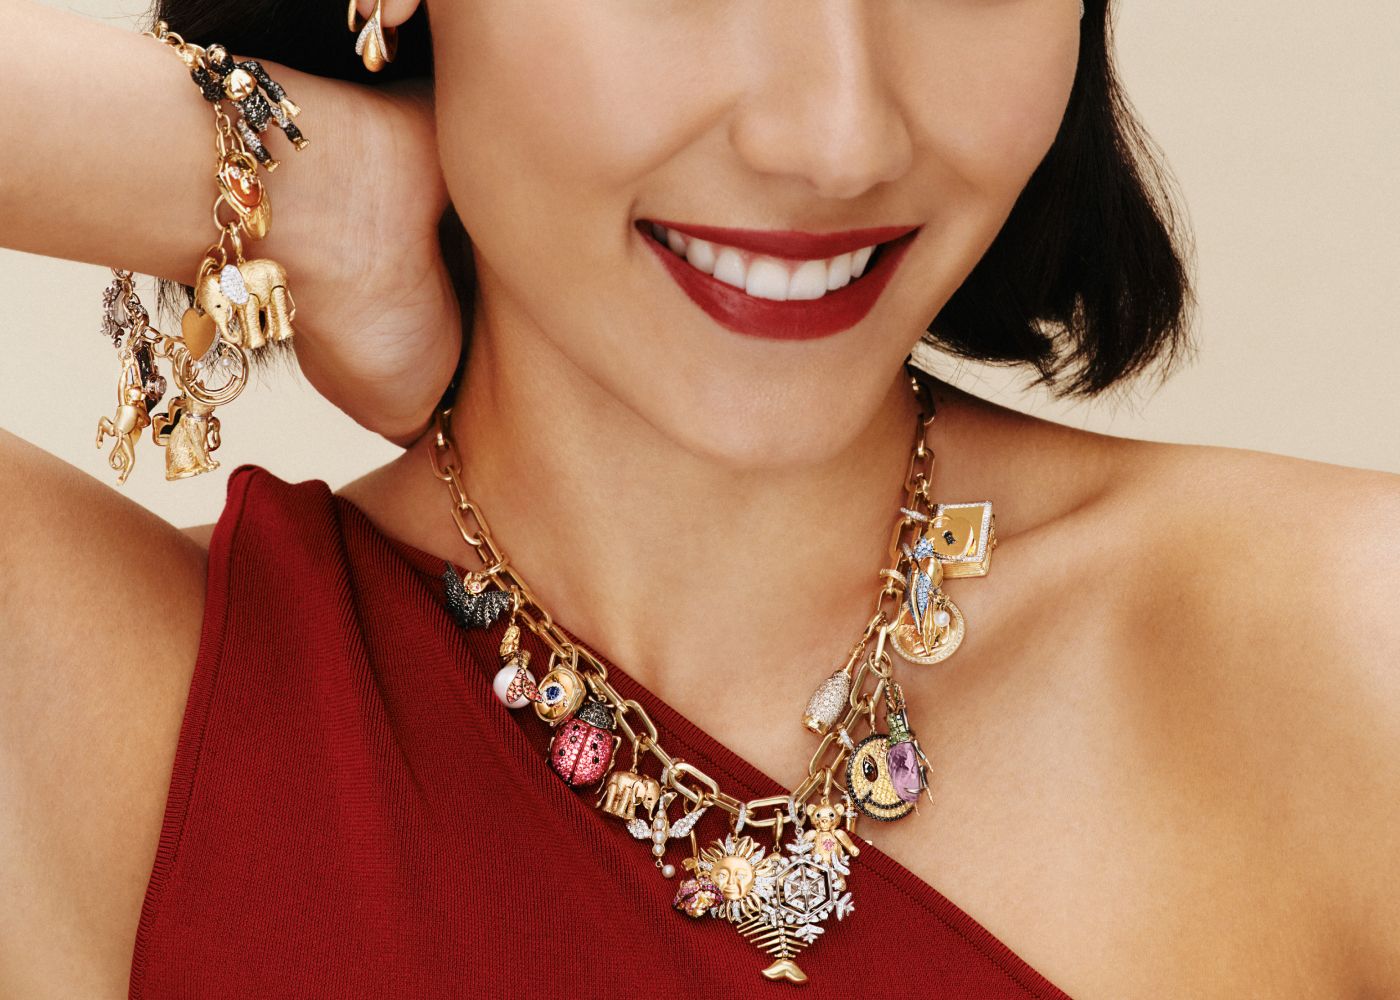 Model wearing Annoushka charm necklace and bracelet